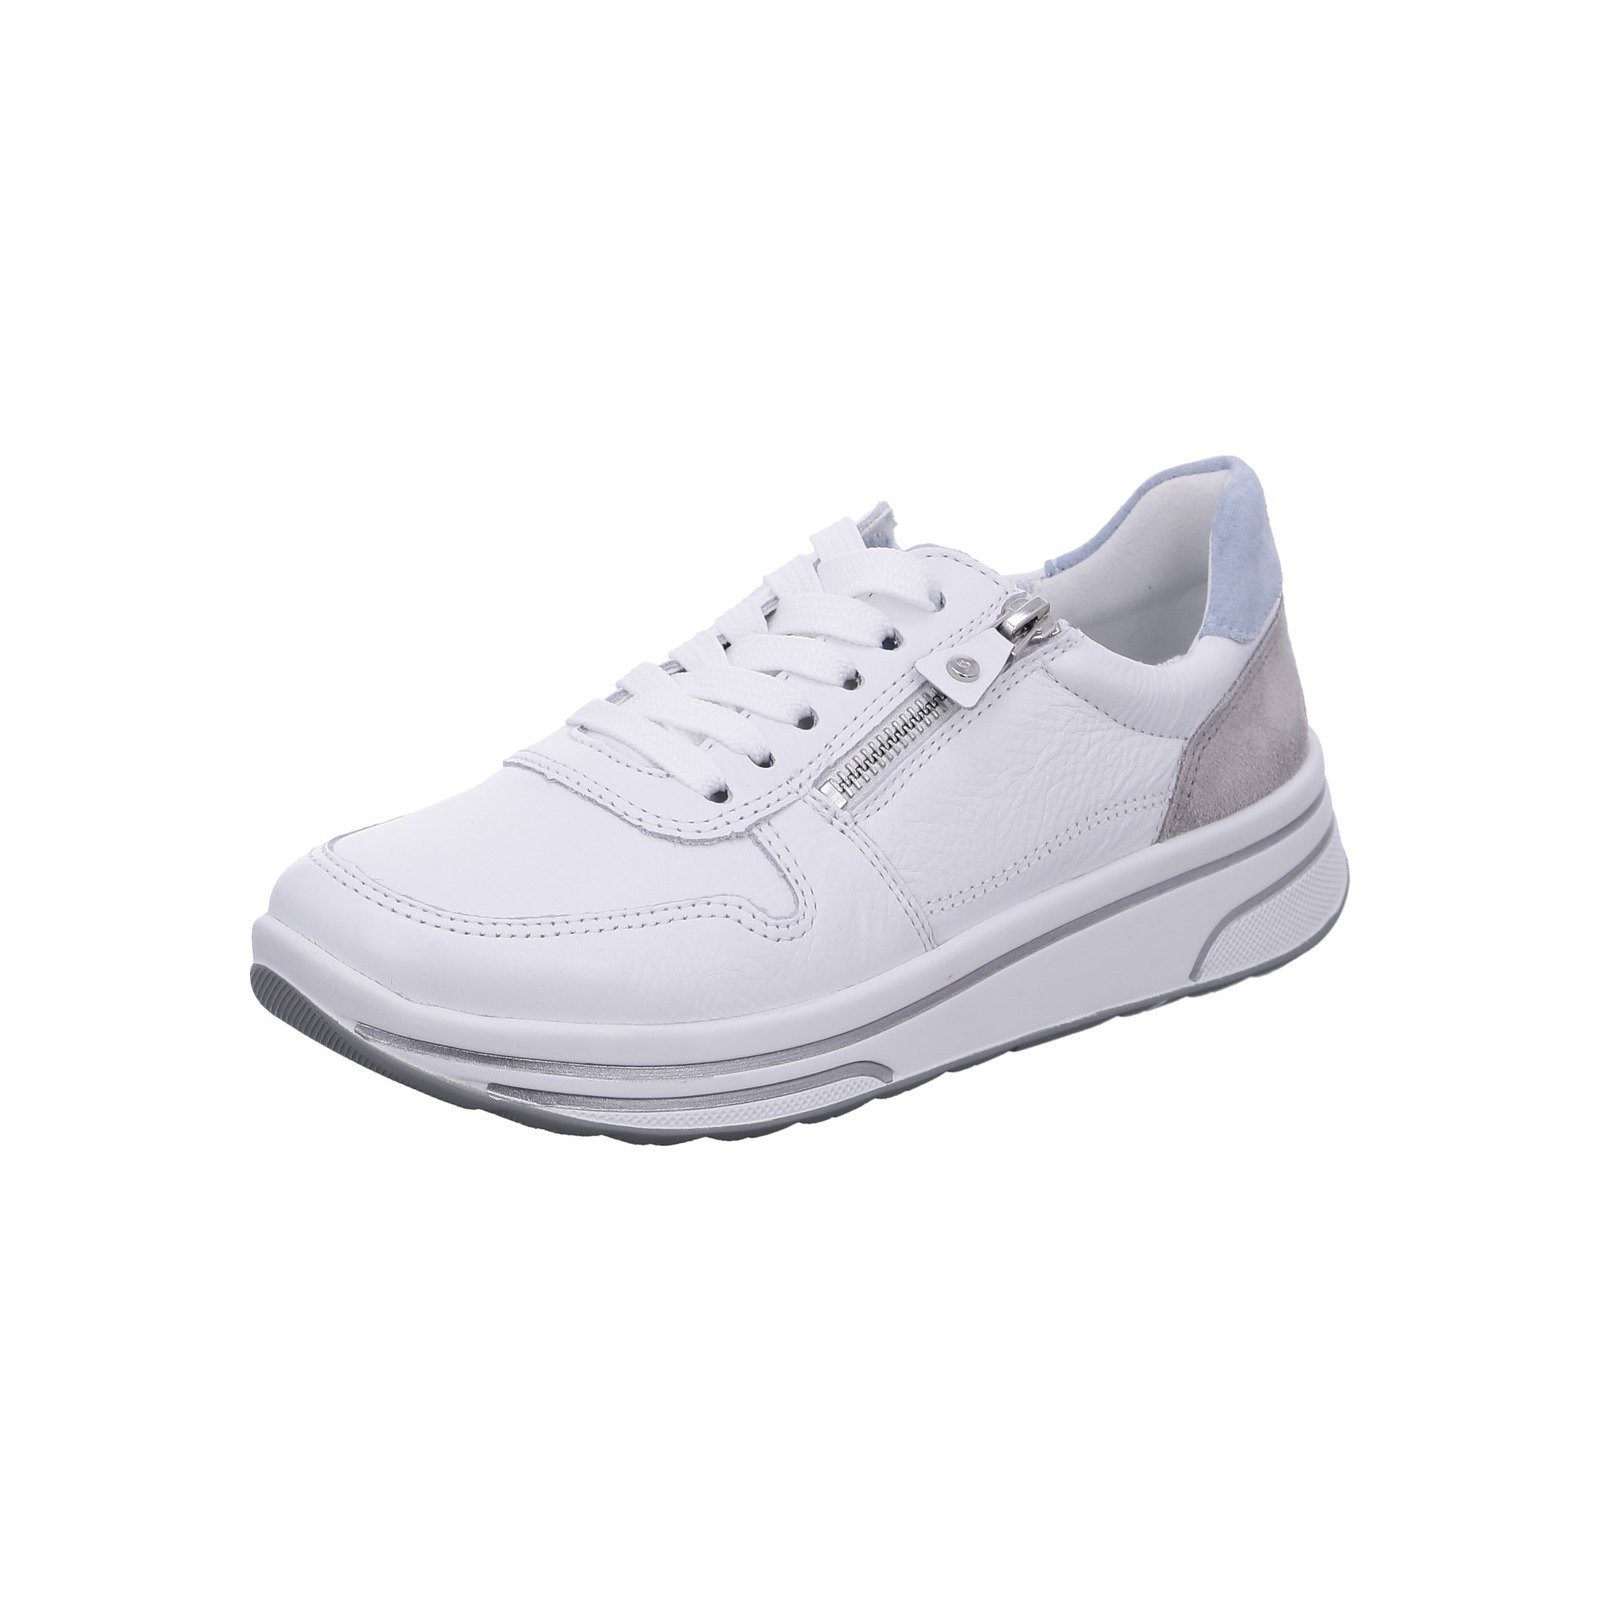 Ara Sapporo - Damen Schuhe Sneaker Sneaker Materialmix weiß